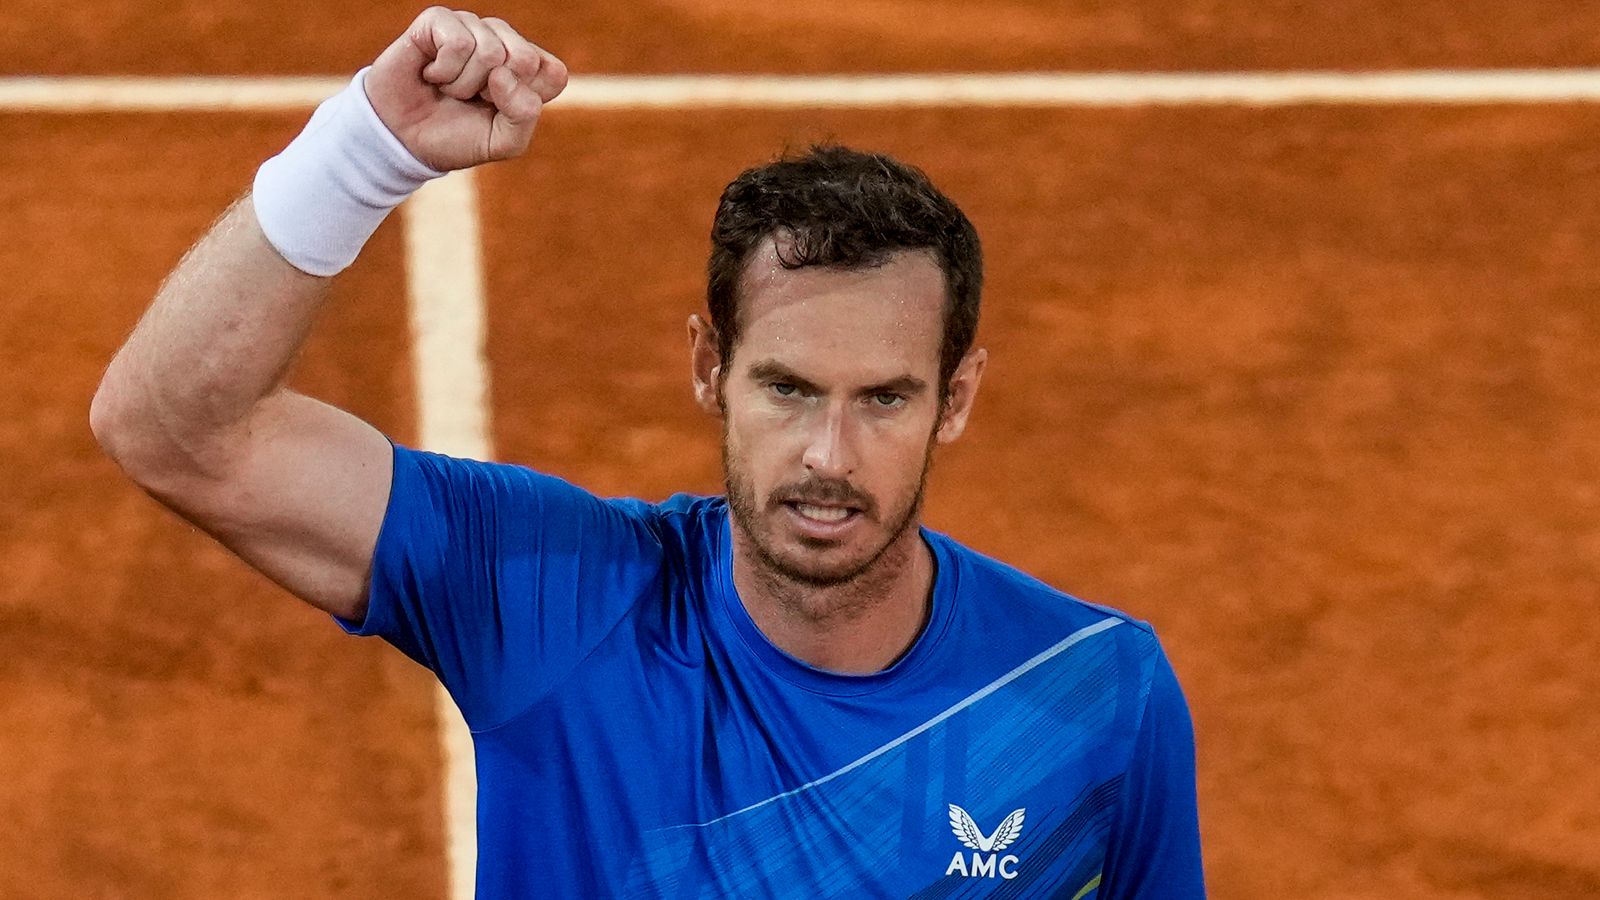 Andy Murray, 마드리드 오픈에서 연속 세트 경기에서 Dominic Thiem을 꺾고 5년 만에 클레이 우승 |  테니스 뉴스